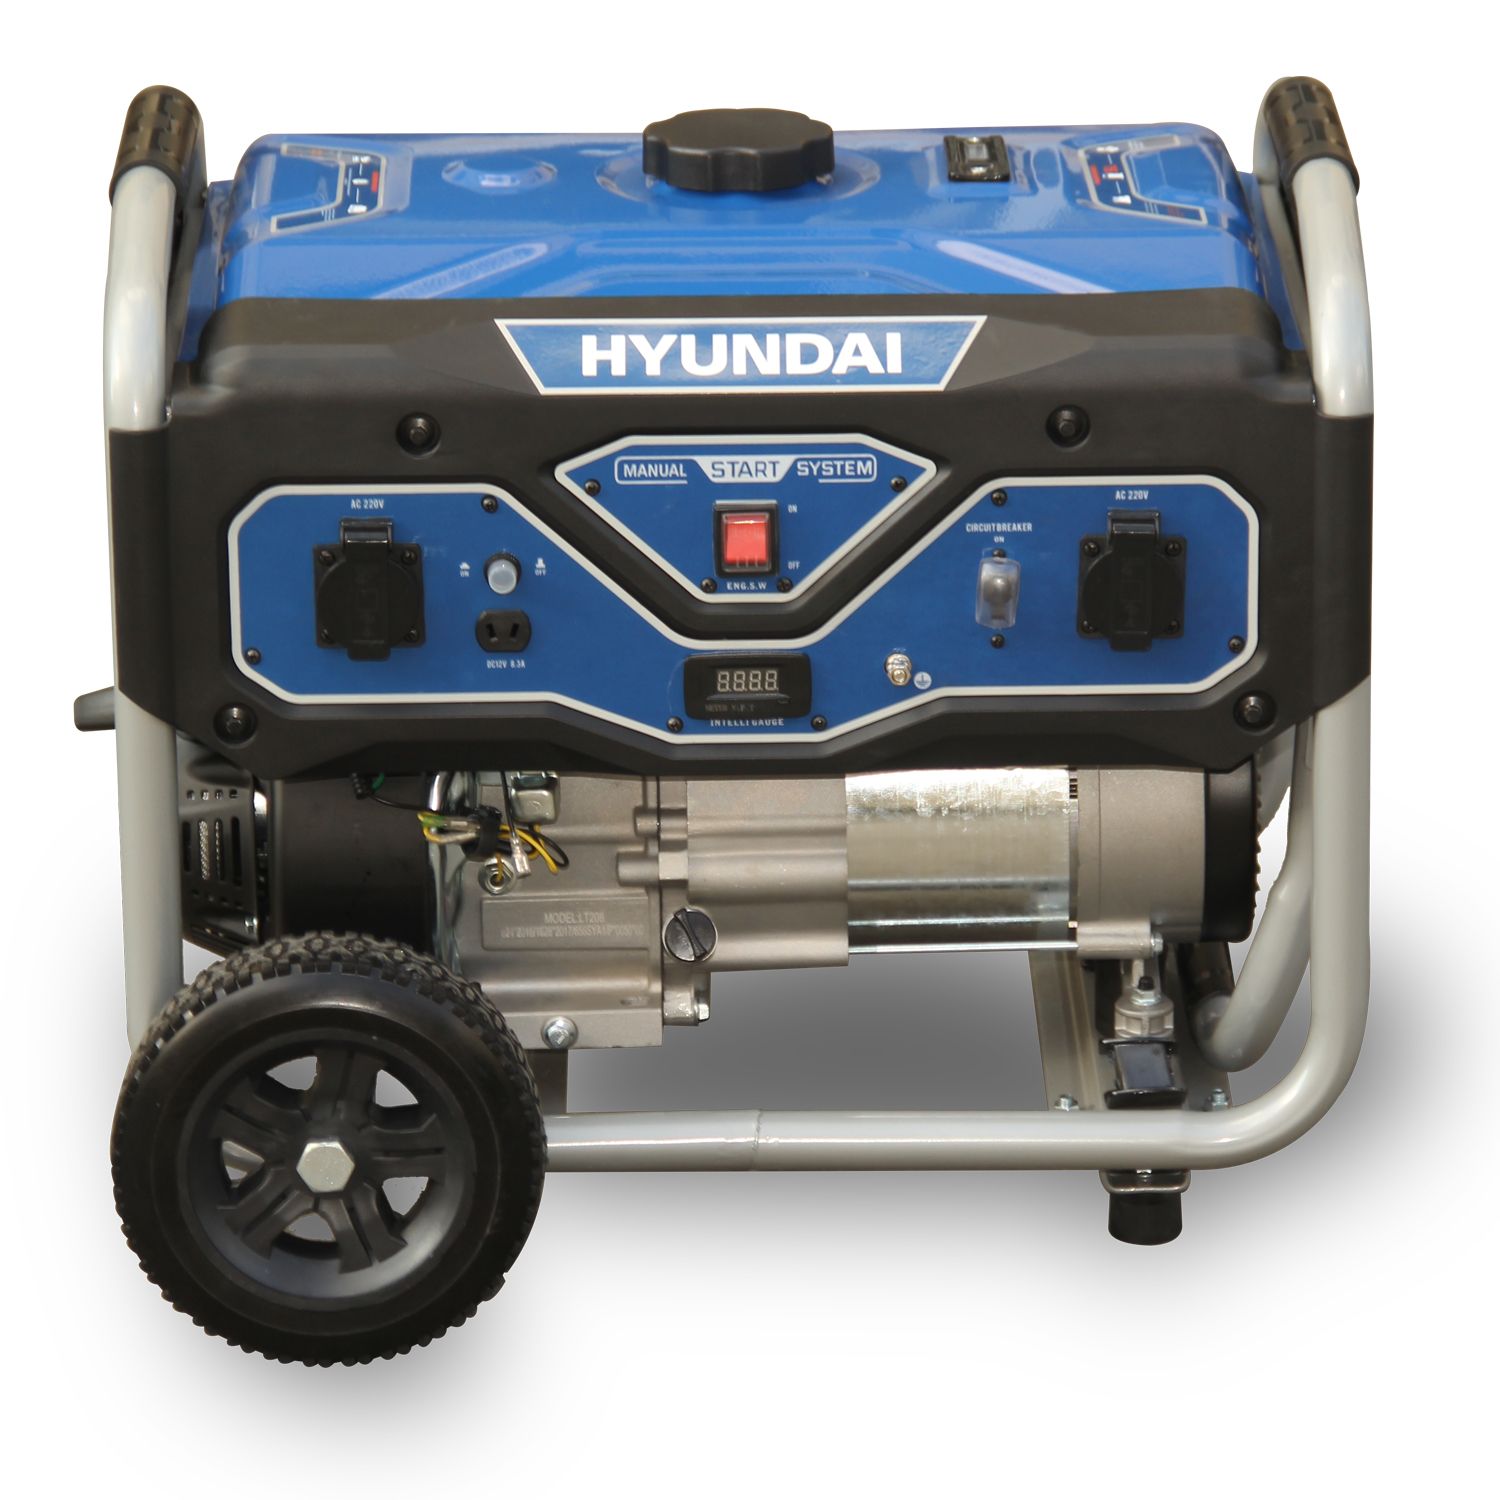 Hyundai generator 3kW - 7PK